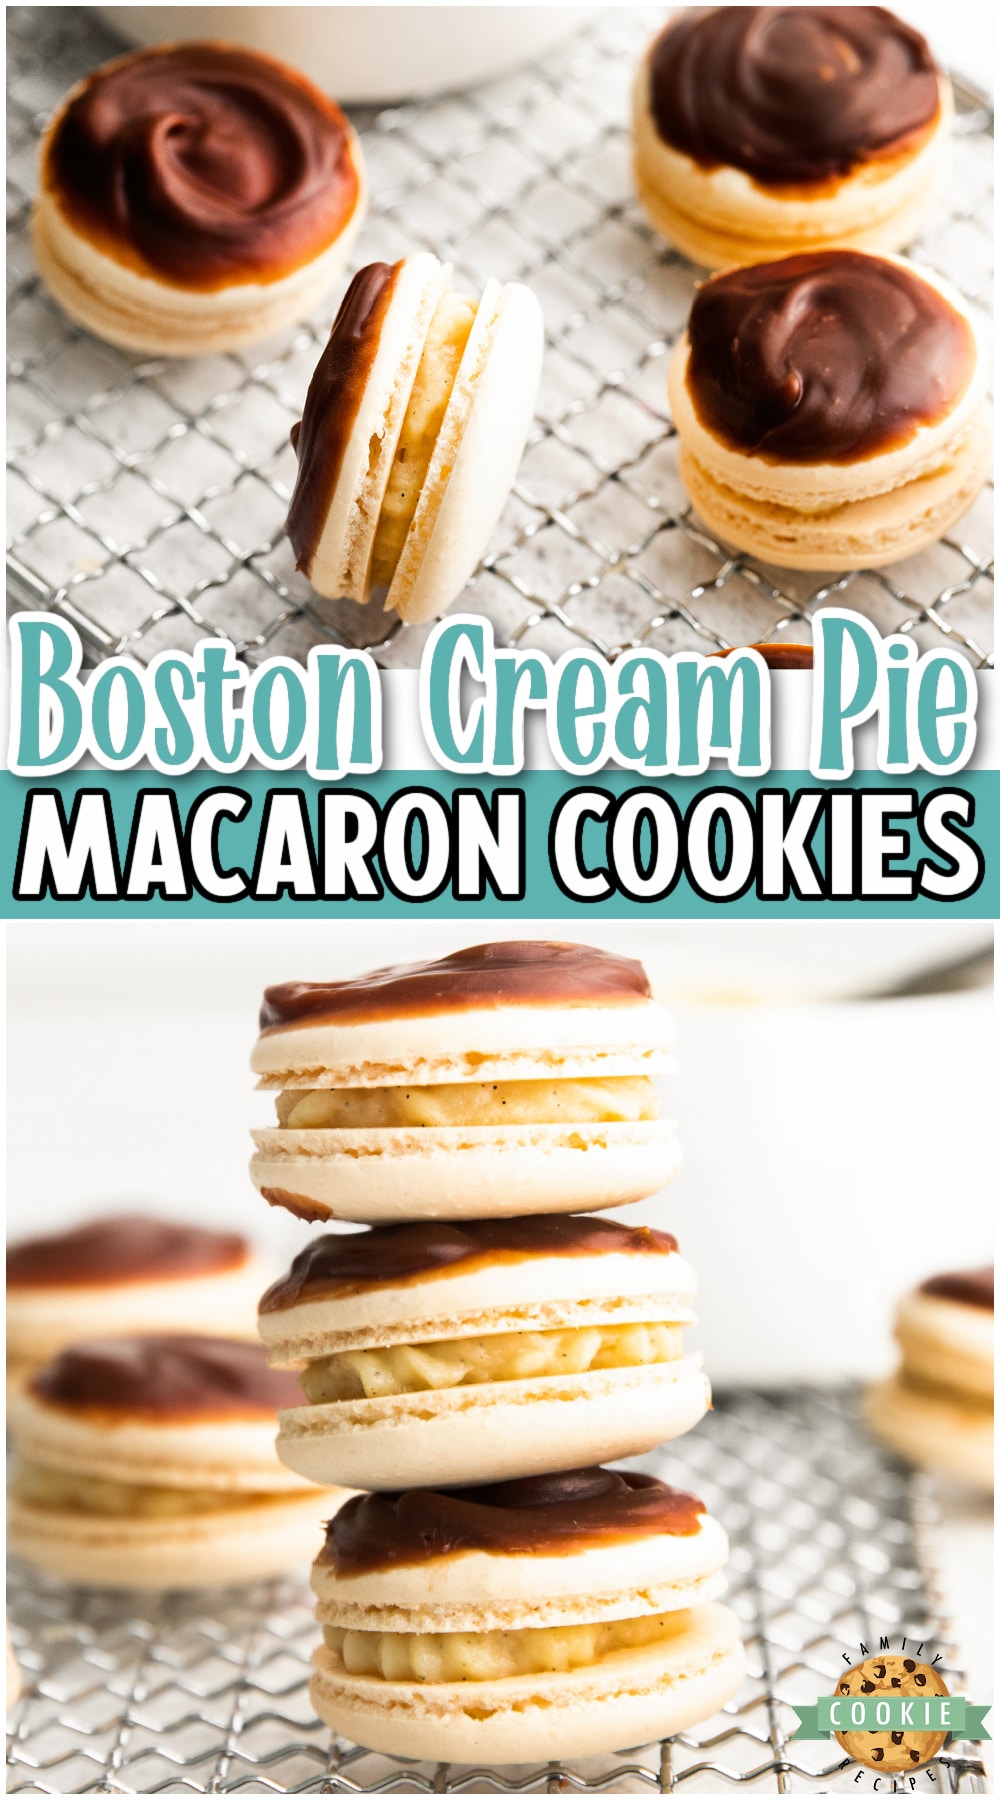 Boston cream pie macarons made with chewy macaron shells, custard filling & chocolate ganache. Delicate sandwich cookies that mimic delicious Boston Cream Pie! 